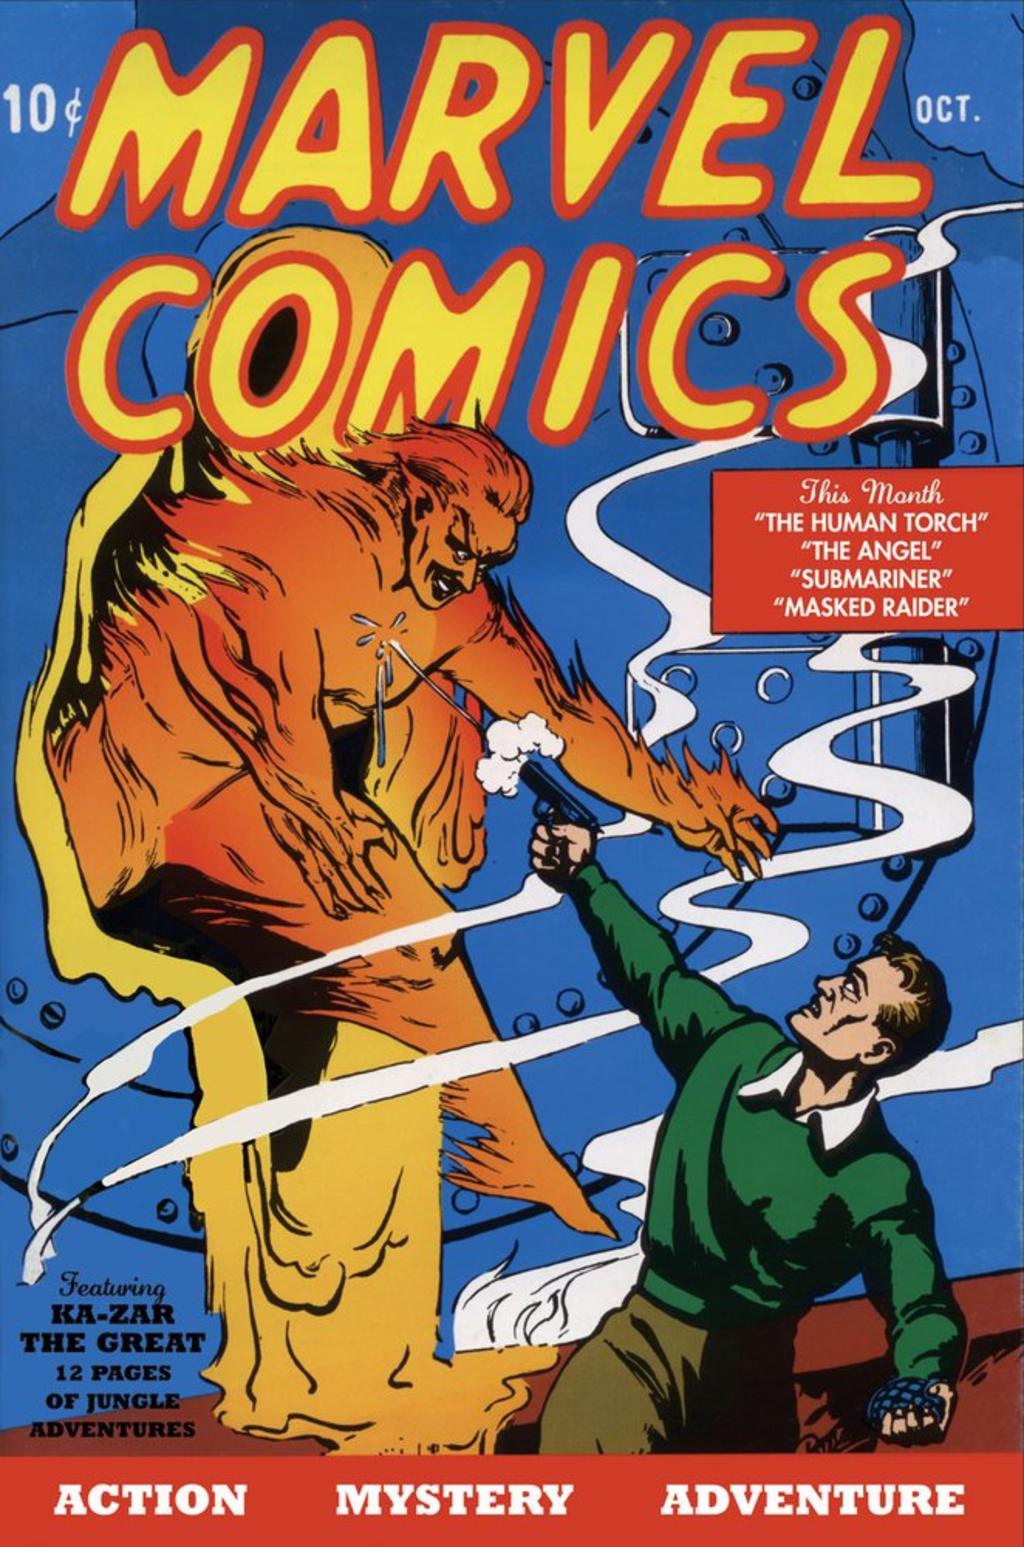 Heritage Auctions dijo que el comprador de Marvel Comics No. 1, de 1939, pidió permanecer anónimo. (ESPECIAL)
